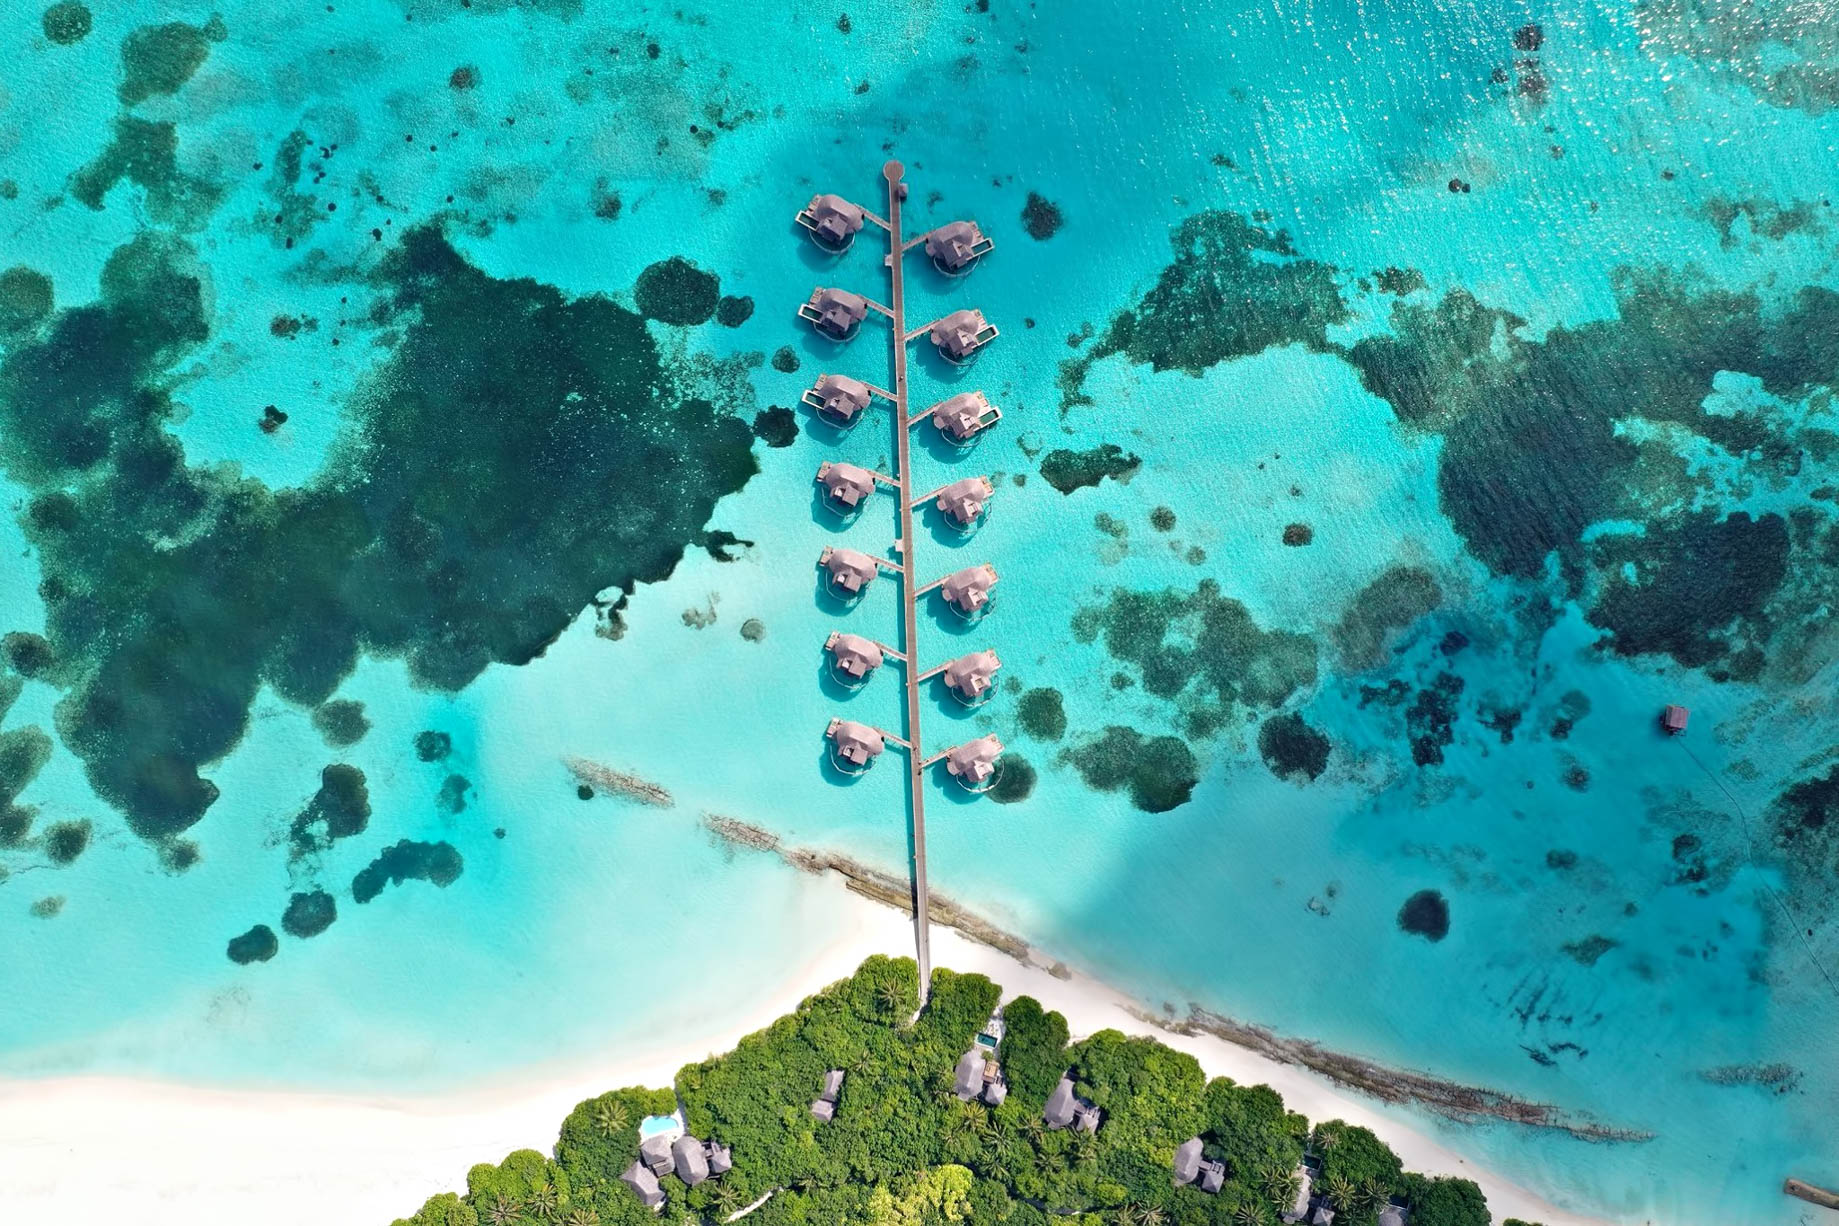 Six Senses Laamu Resort - Laamu Atoll, Maldives - Overwater Villa Boardwalk Aerial